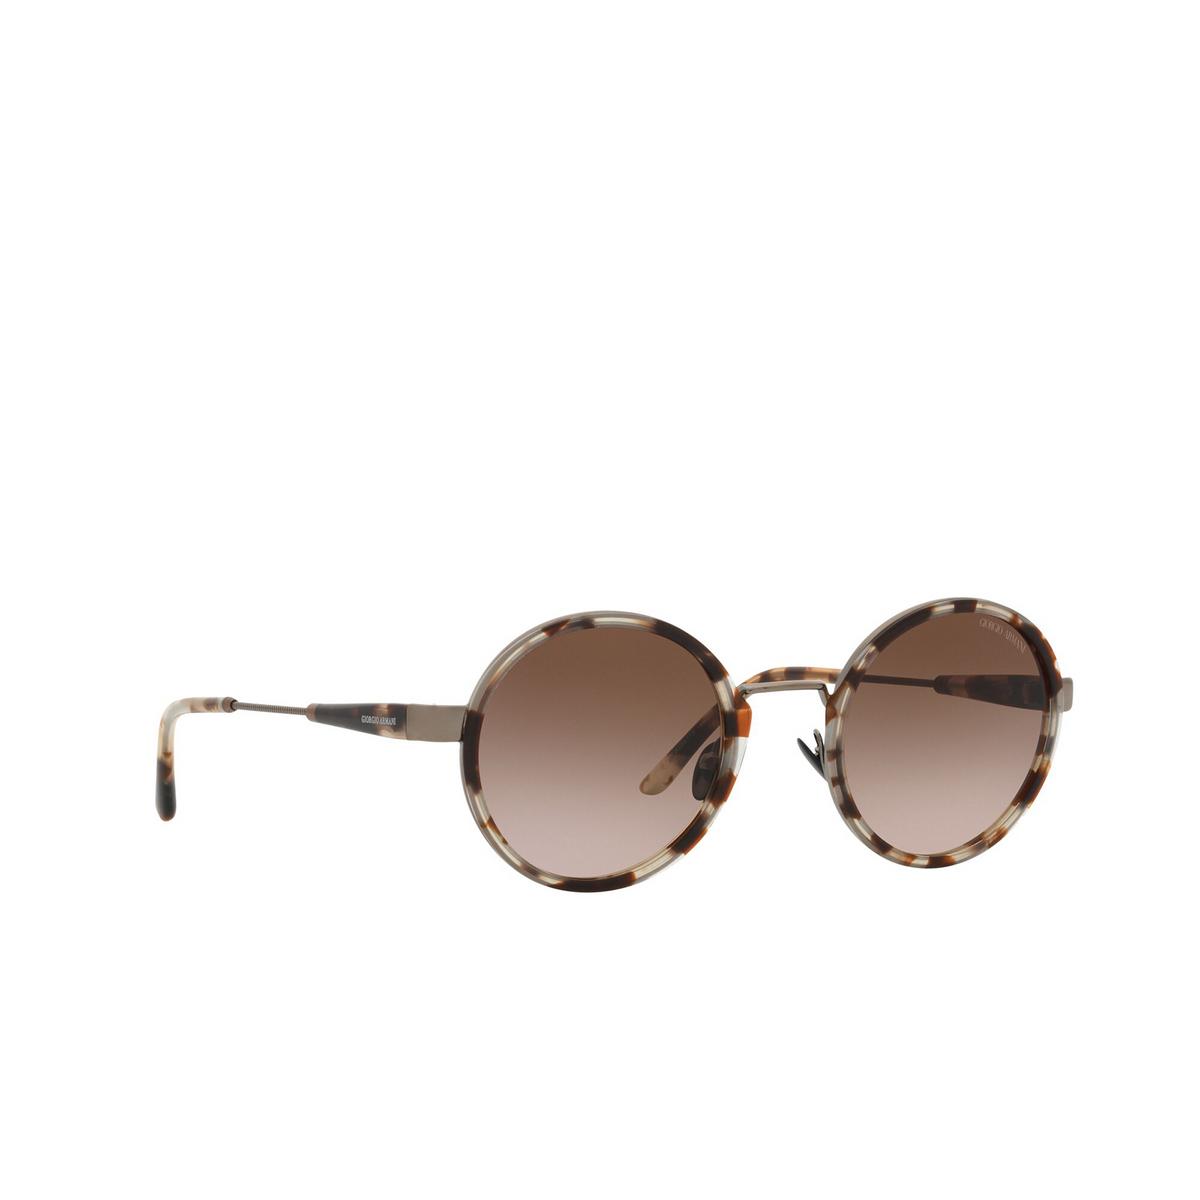 Giorgio Armani® Round Sunglasses: AR6133 color Brown/tortoise 333913 - three-quarters view.